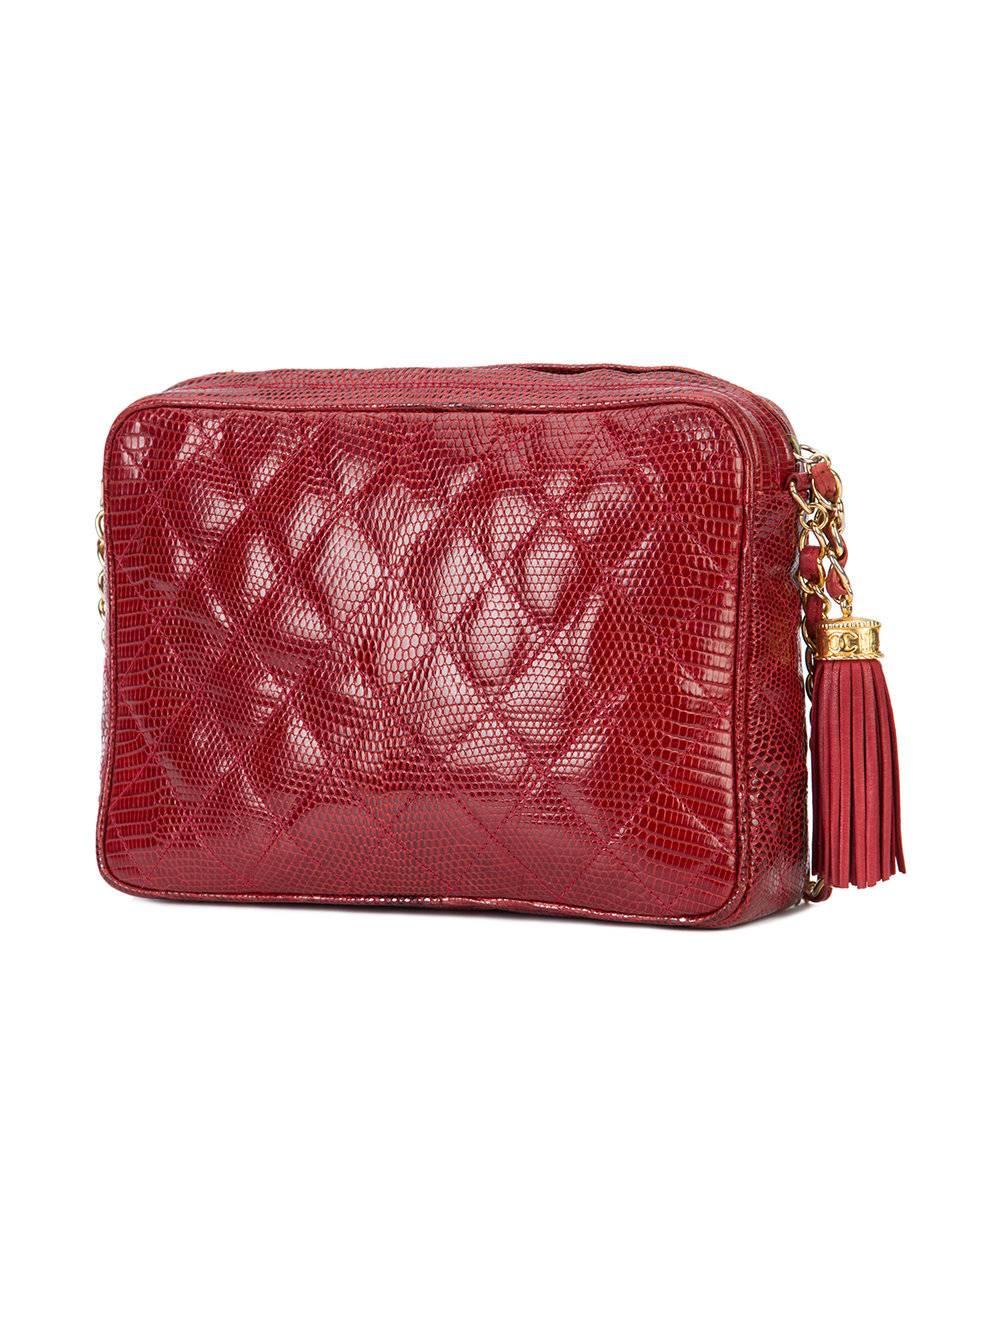 Women's Chanel Red Lizard Leather Tassel Evening Camera Shoulder Bag